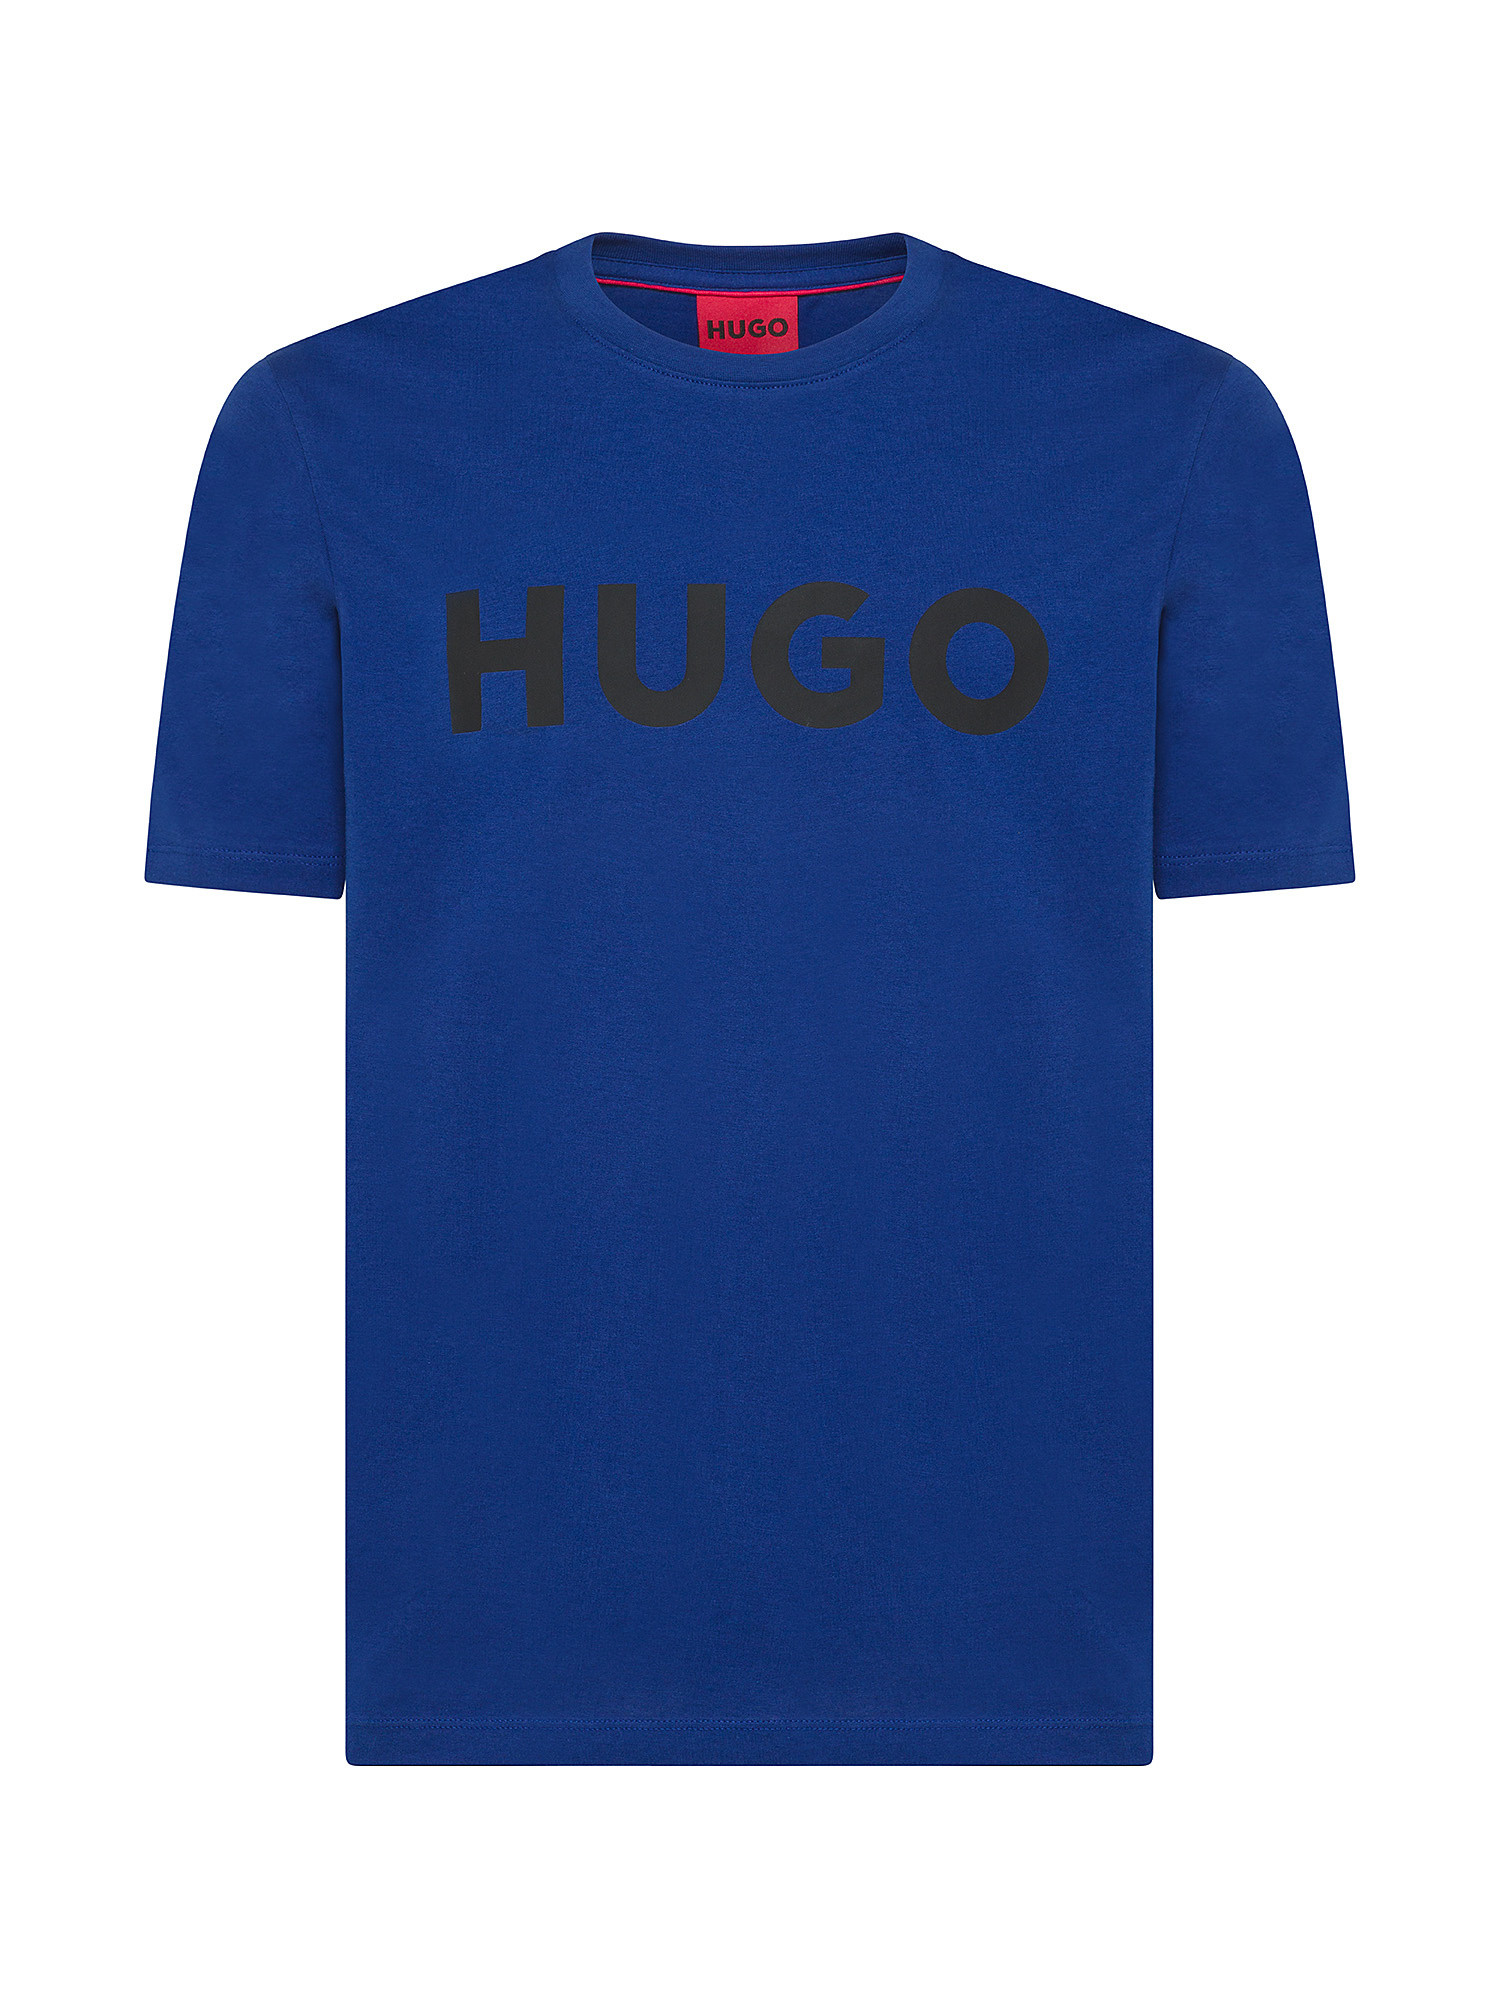 Hugo - Logo cotton t-shirt, Royal Blue, large image number 0